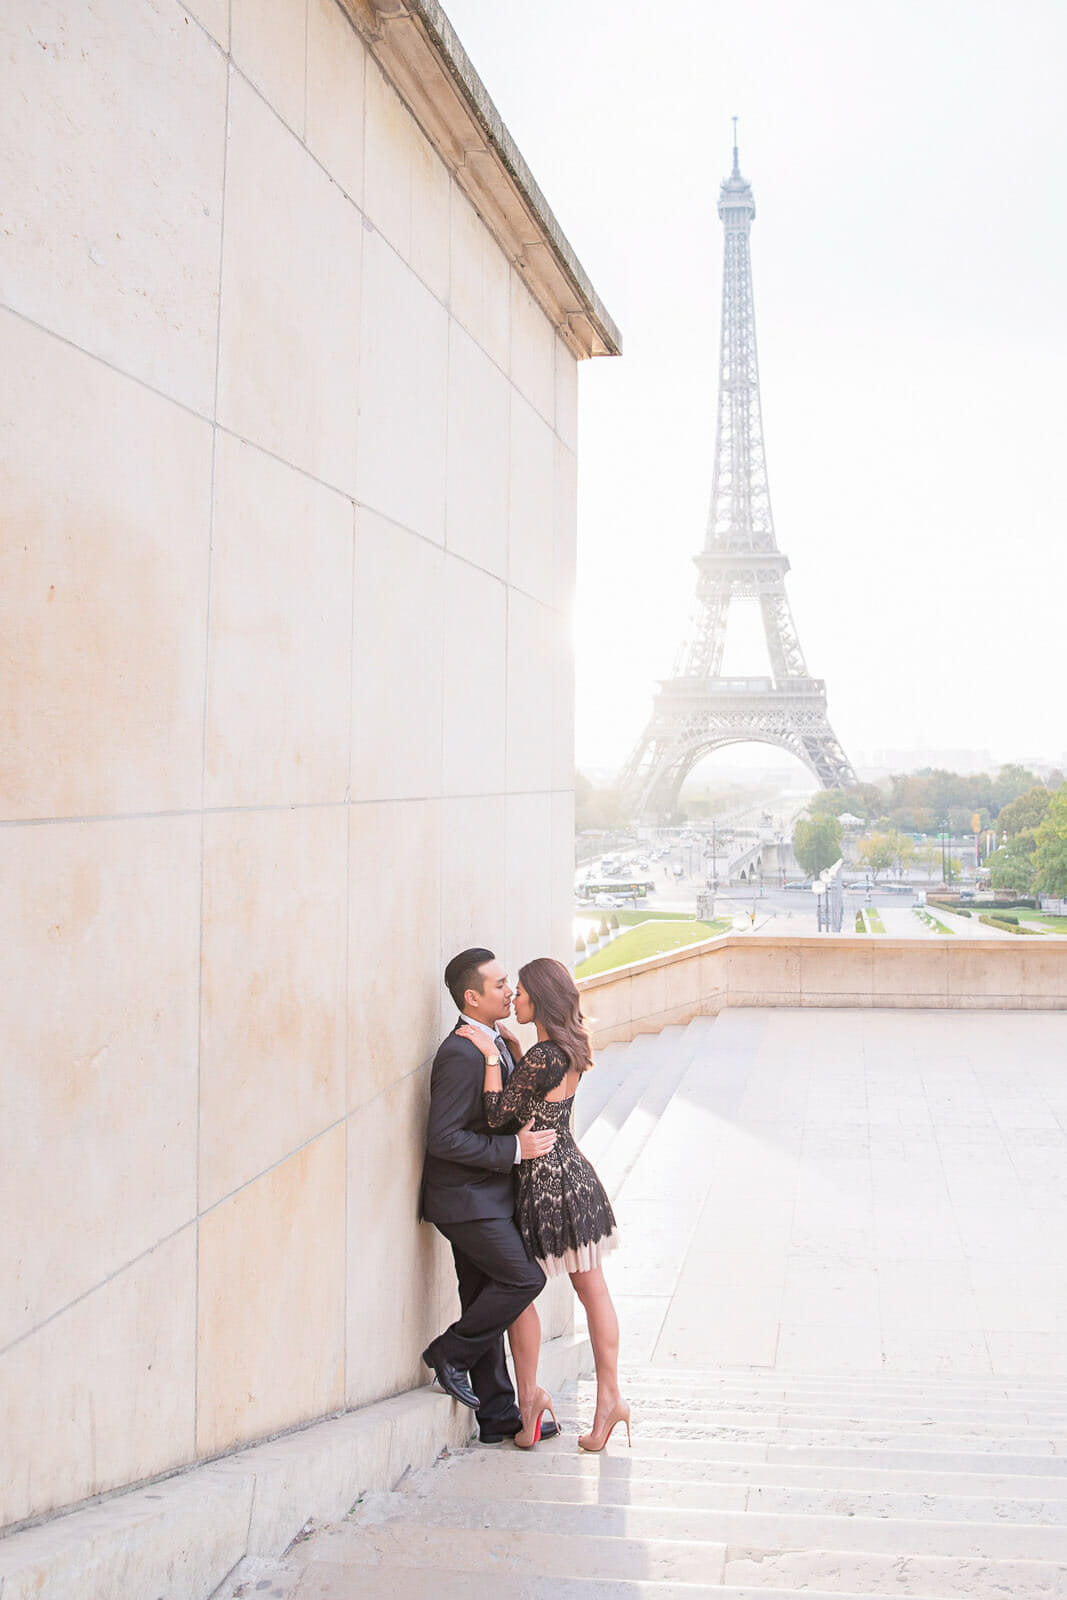 Dreamy Eiffel Tower couple photos at Trocadero around sunrise